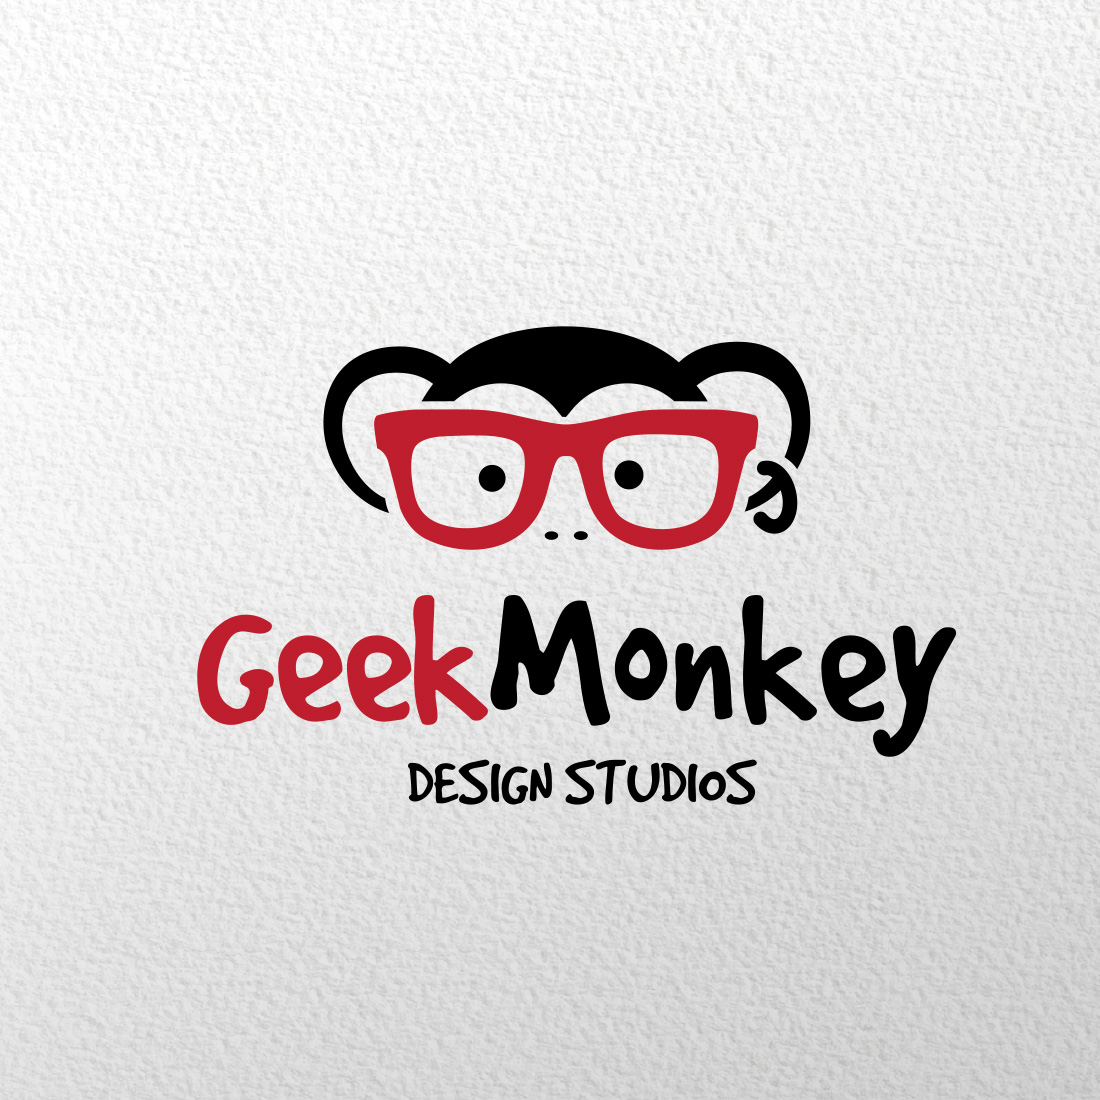 Geekmonkey logo design preview image.